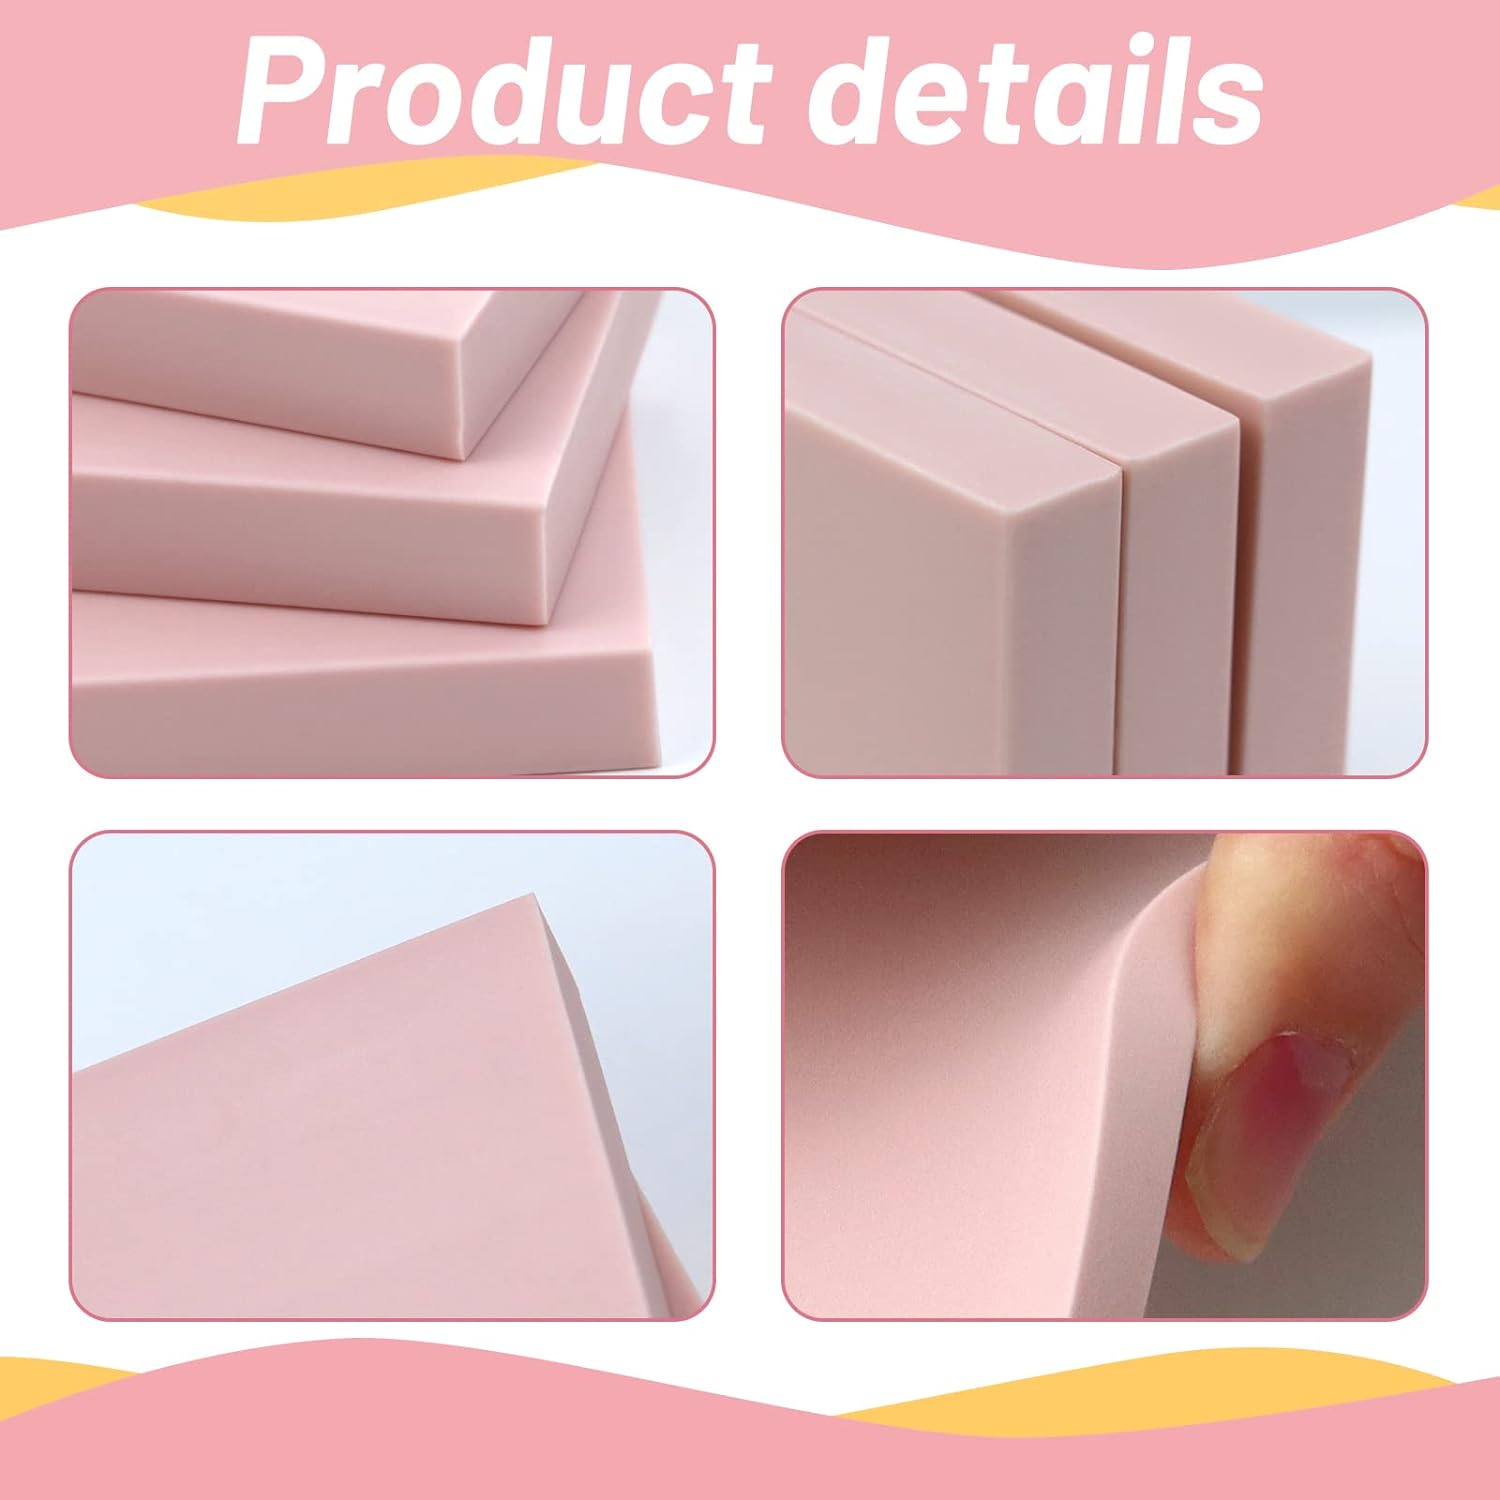 6 Pack Pale Pink Rubber Stamp Carving Blocks Brick 8"x6"